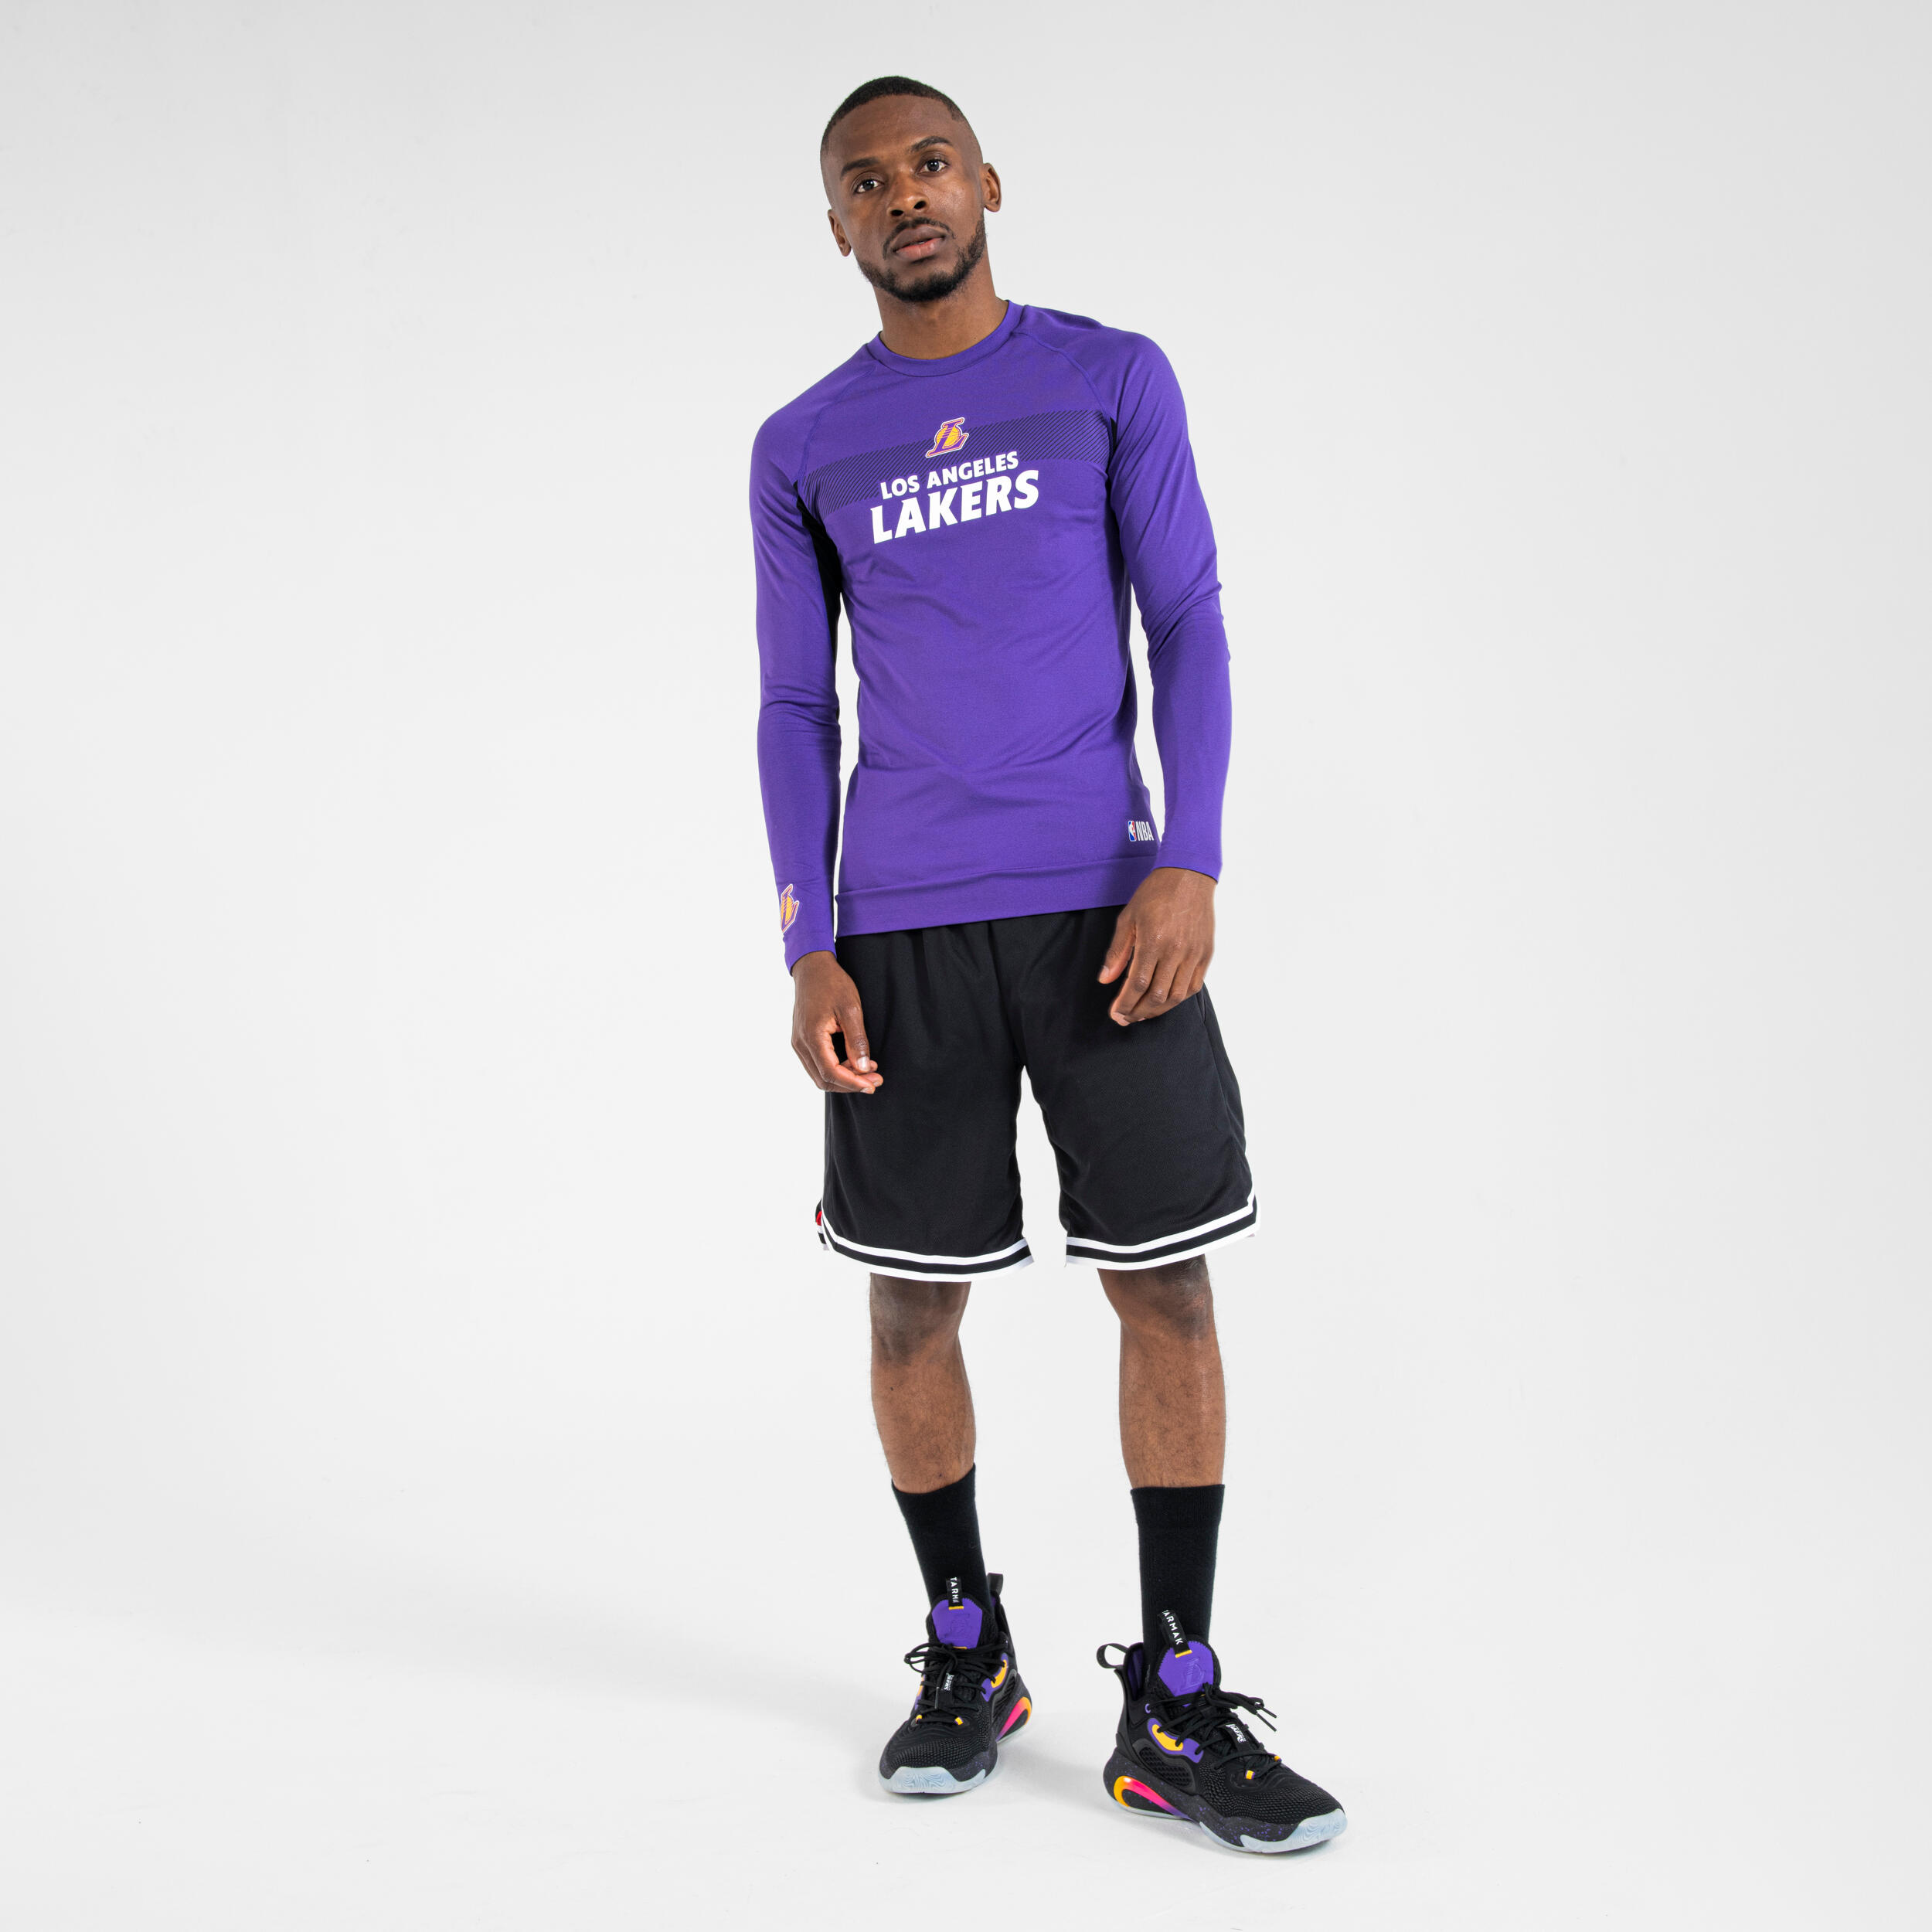 Men's/Women's Basketball Base Layer Jersey UT500 - NBA Los Angeles Lakers/Purple 7/9